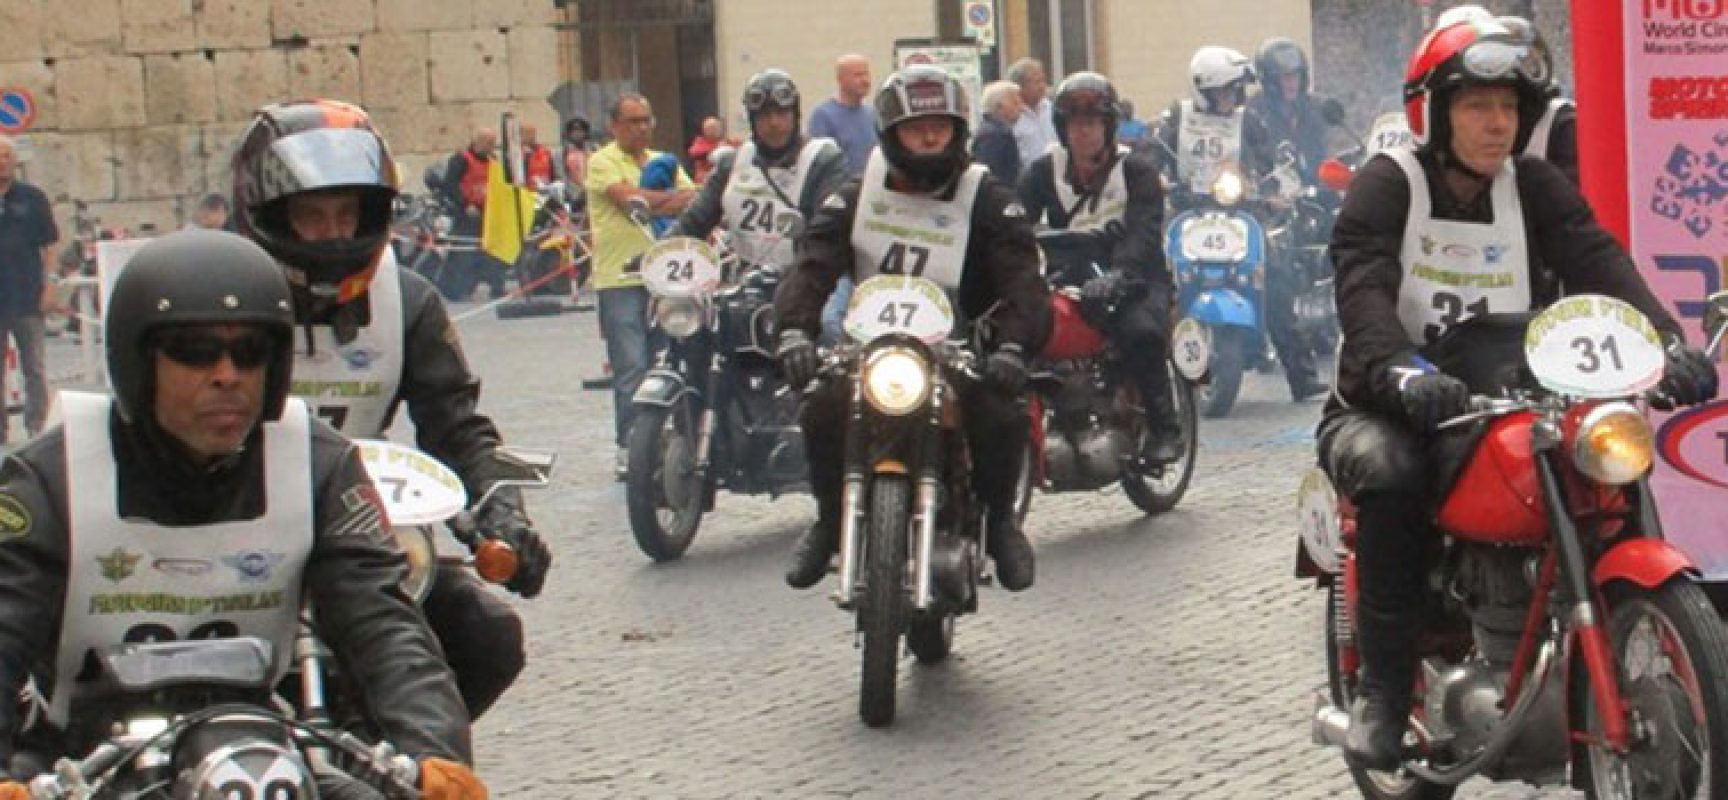 Rievocazione Storica del Motogiro d’Italia toccherà Bisceglie, INFO su chiusura traffico